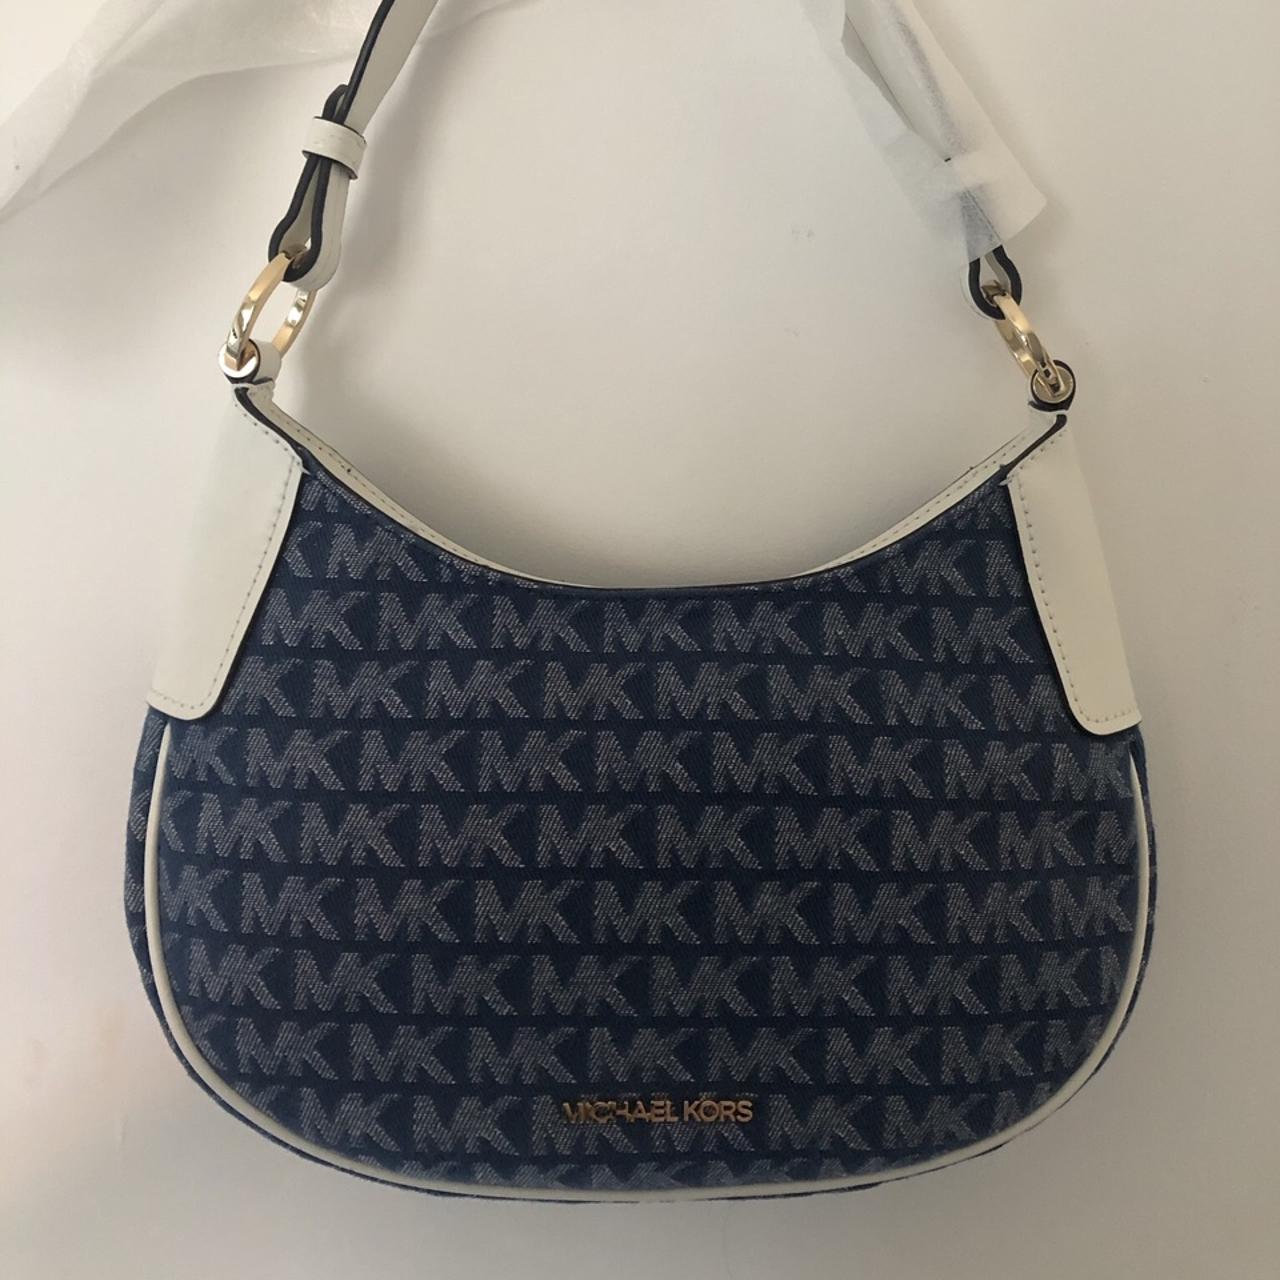 Free: RARE!!!!NEW MICHAEL Kors Denim Tote GIN for MK Wallet - Handbags -  Listia.com Auctions for Free Stuff